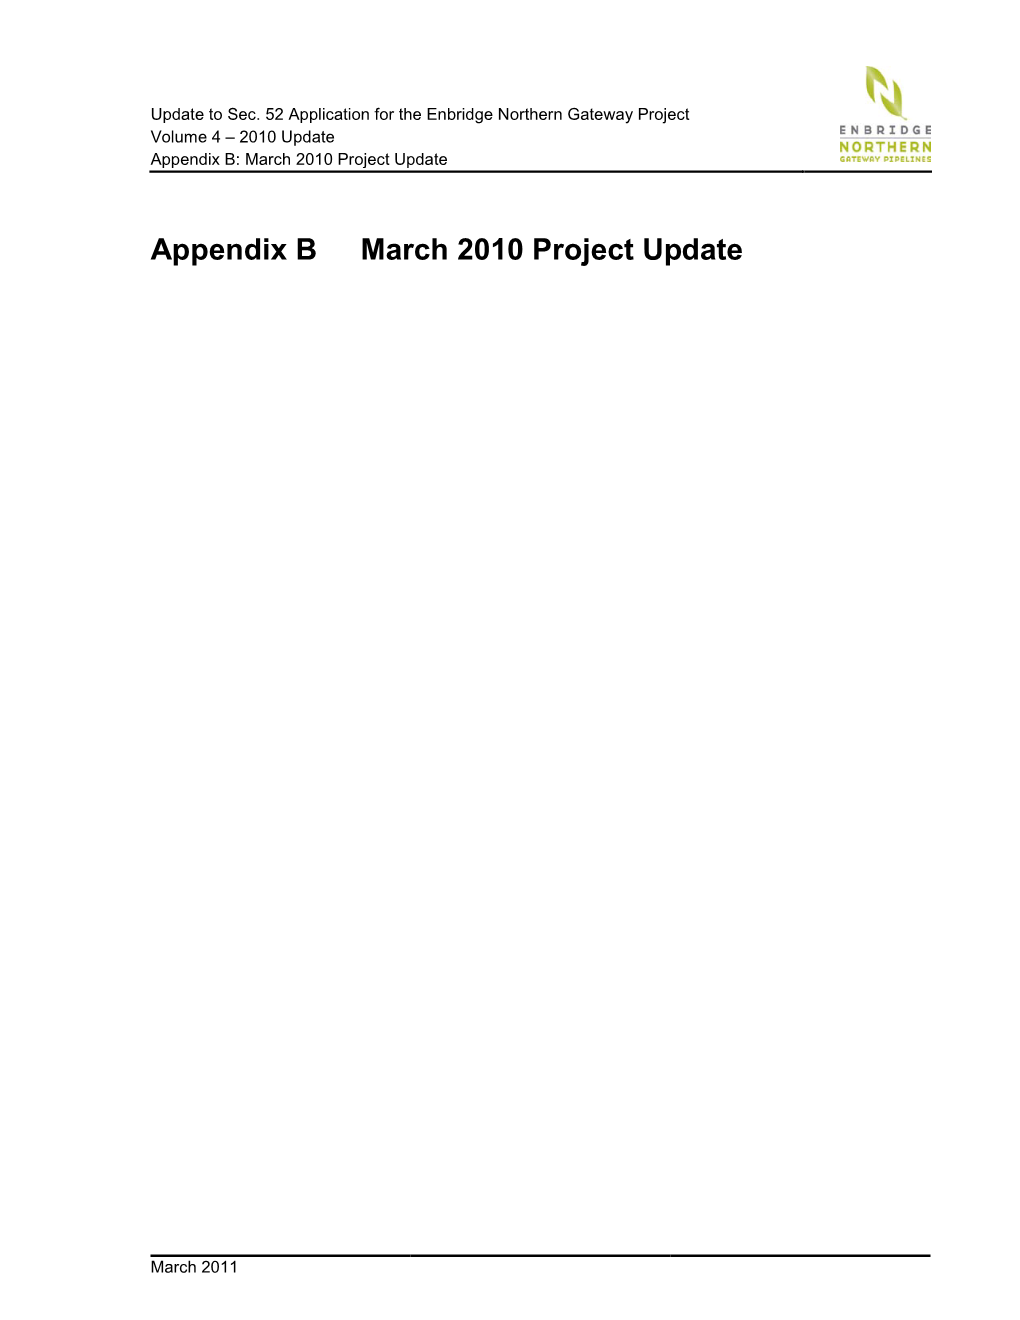 Appendix B March 2010 Project Update